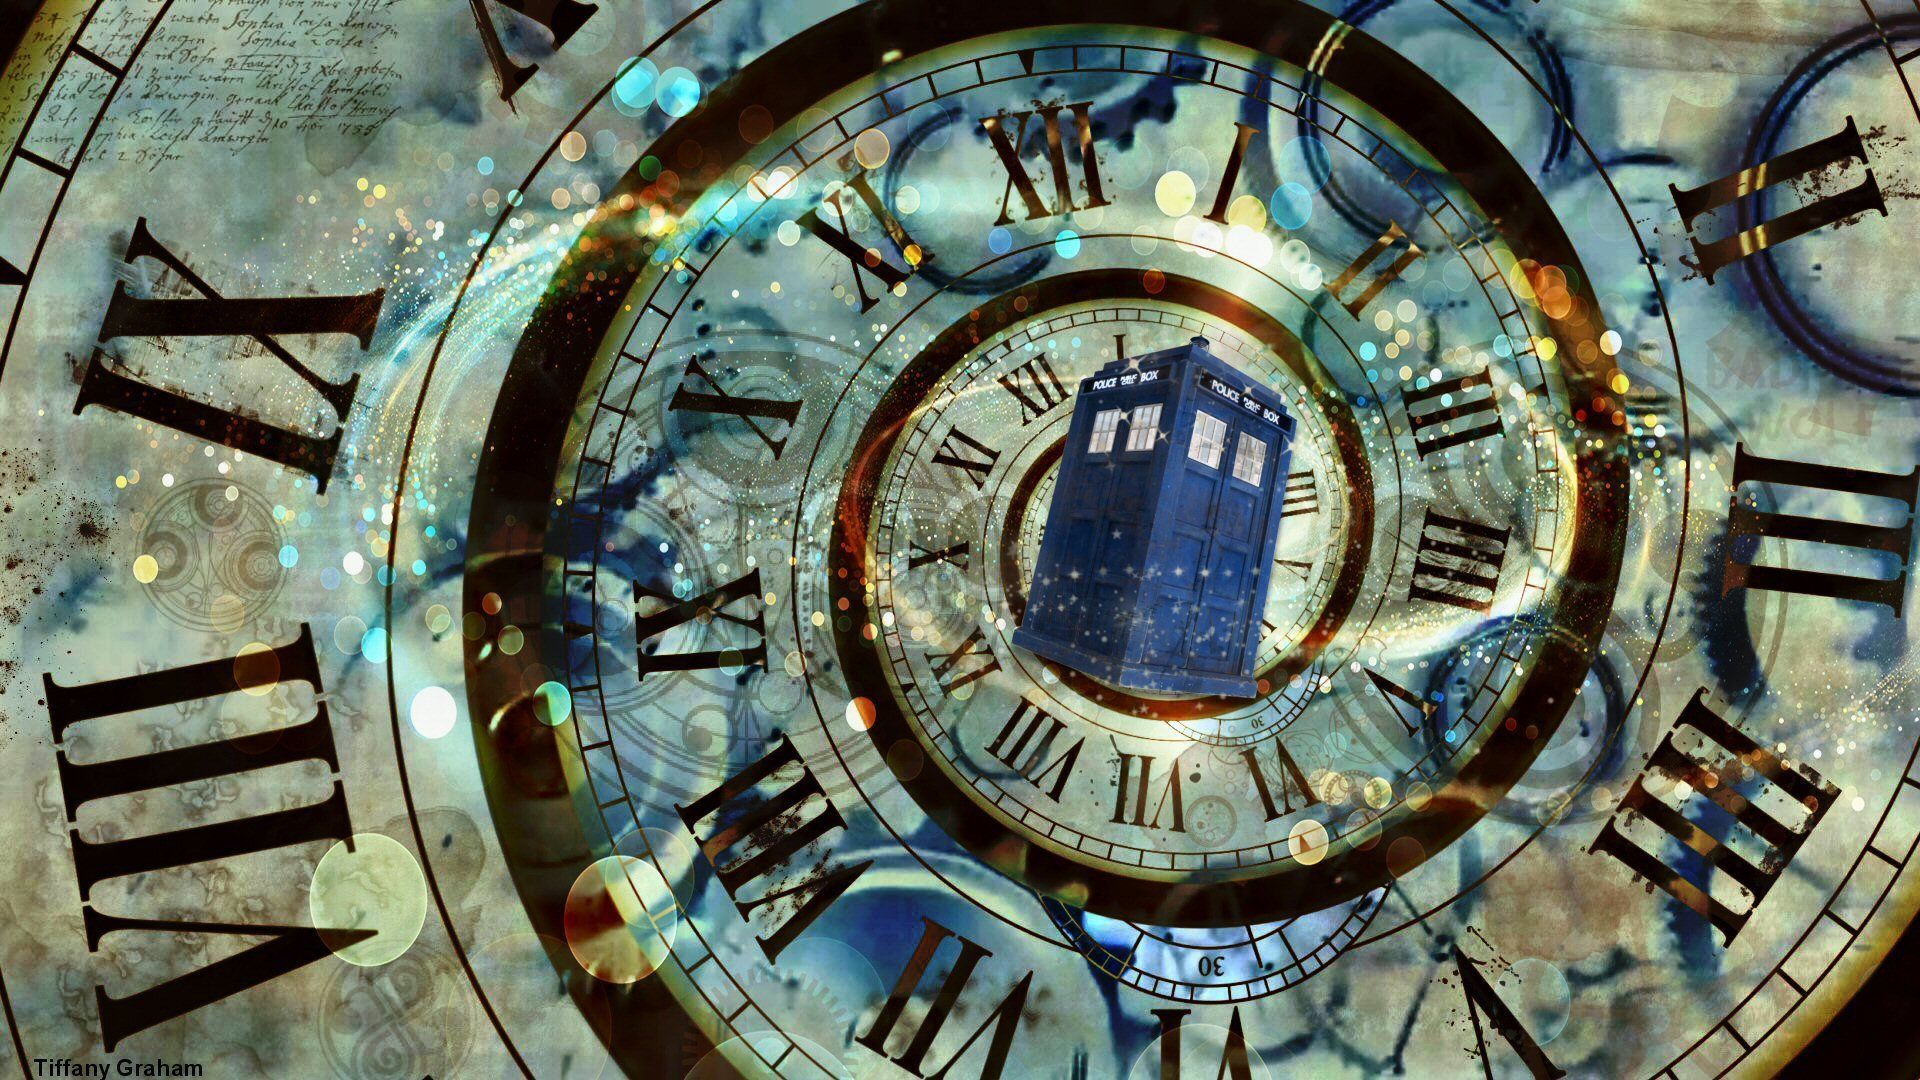 Doctor Who Tardis Wallpaper HD Resolution. Tardis wallpaper